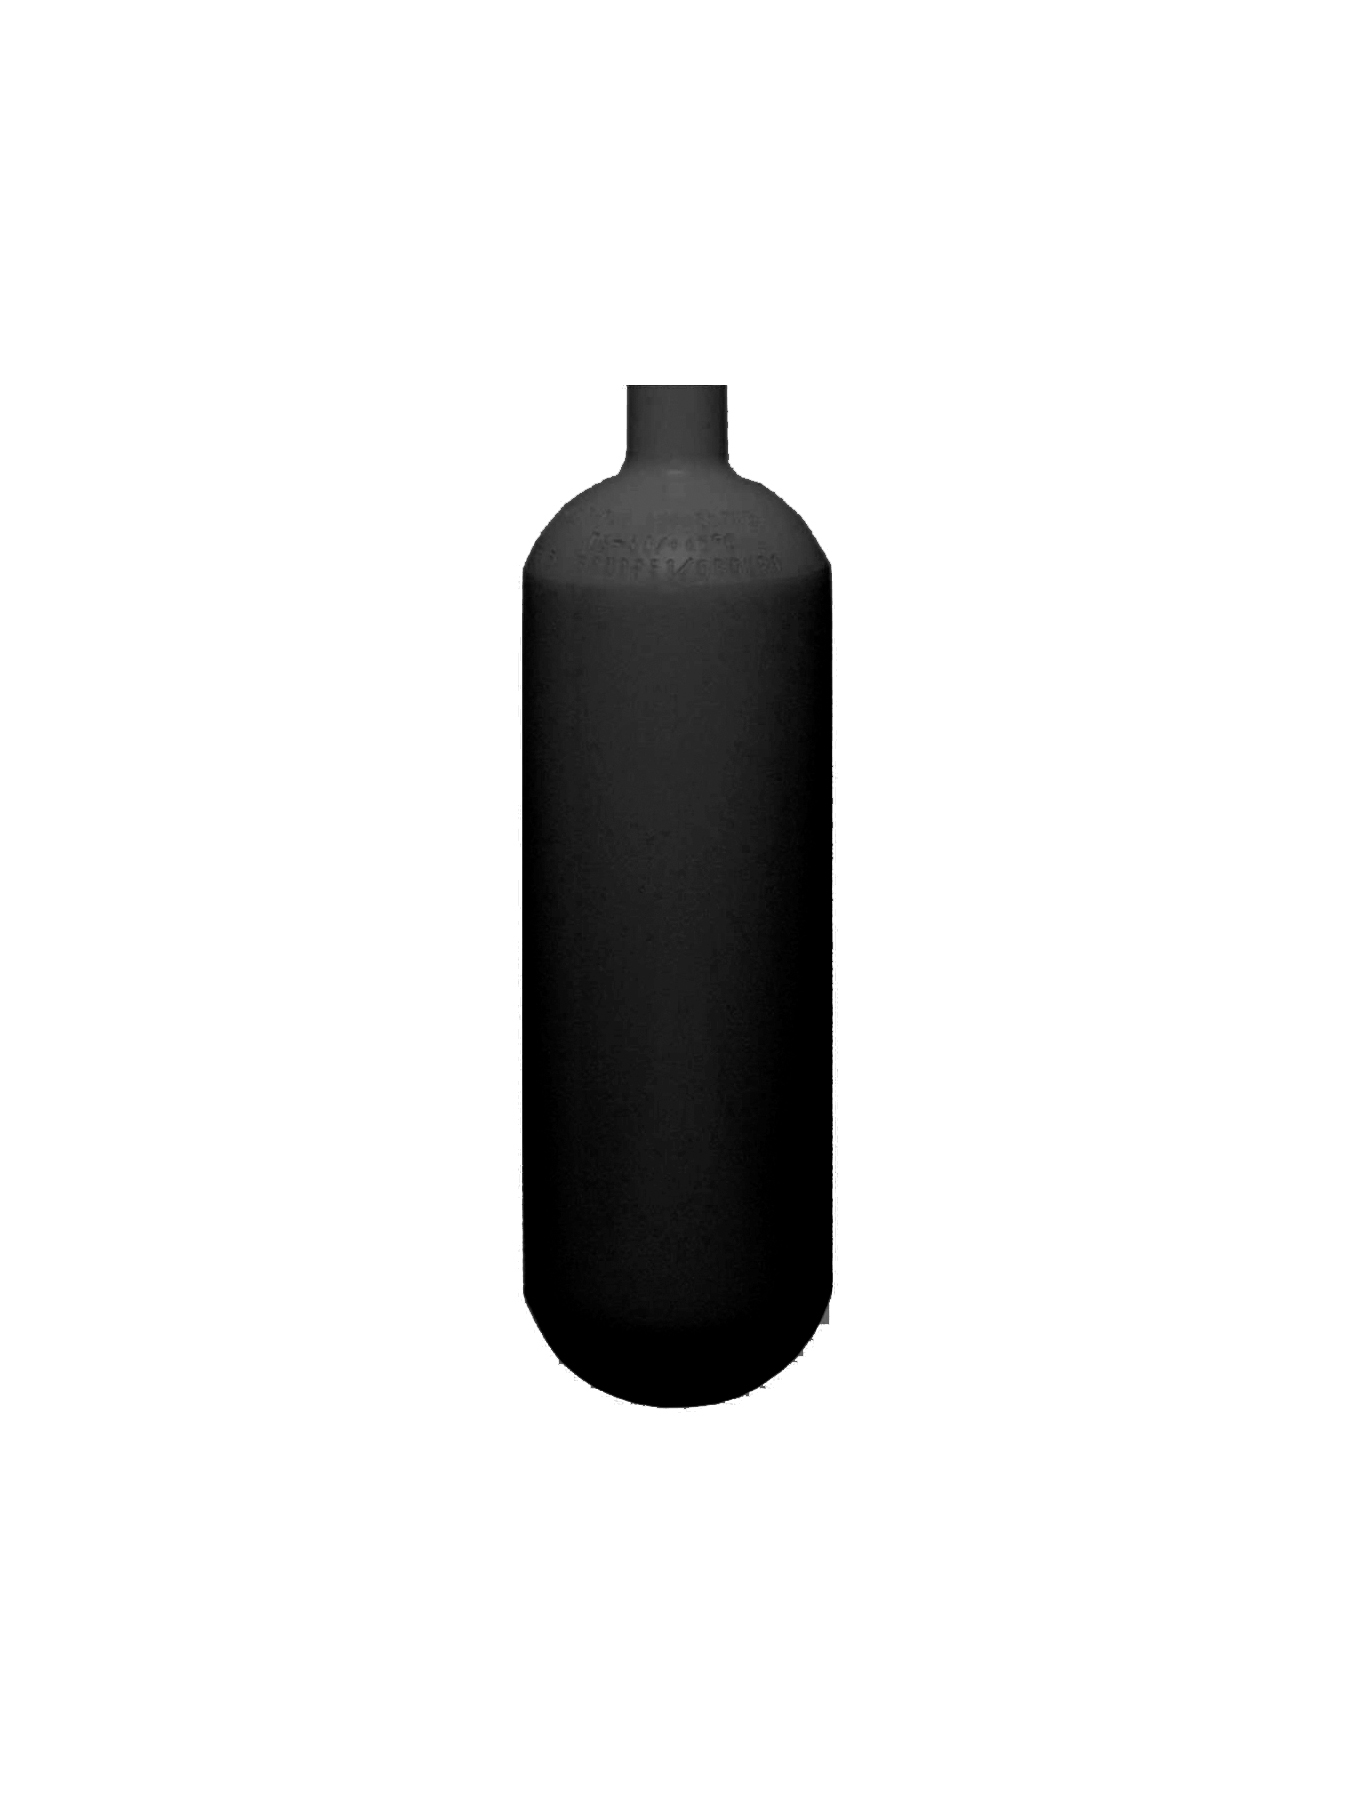 ECS 1 L / 200 bar Stahlflaschenkörper, schwarz